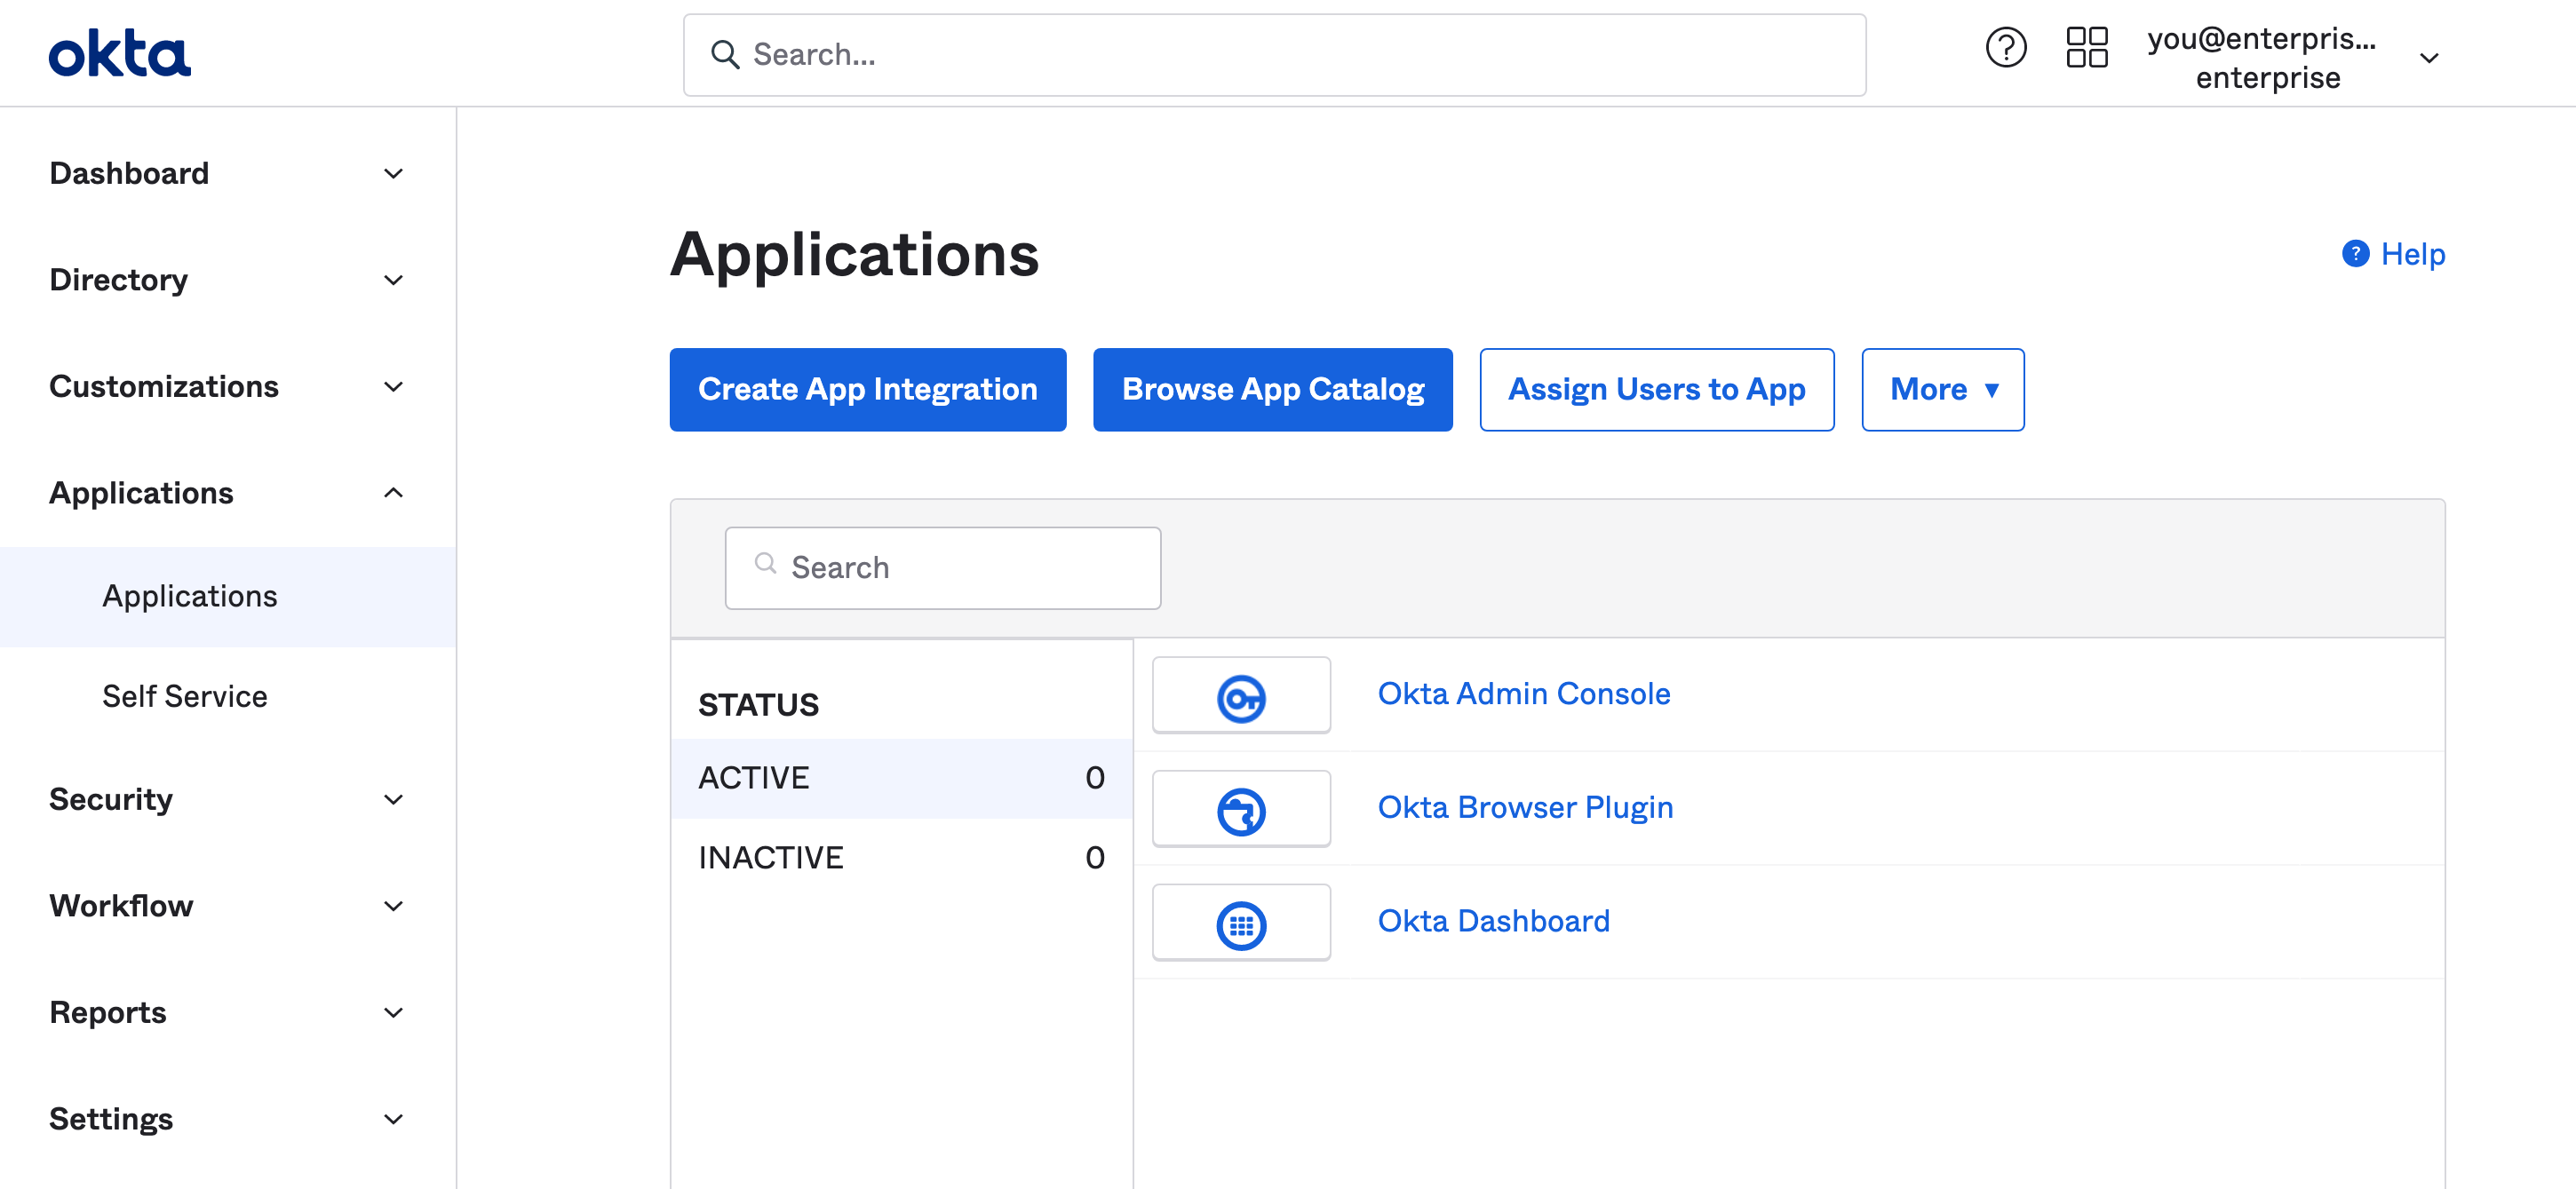 Okta dashboard: Create App Integration
button